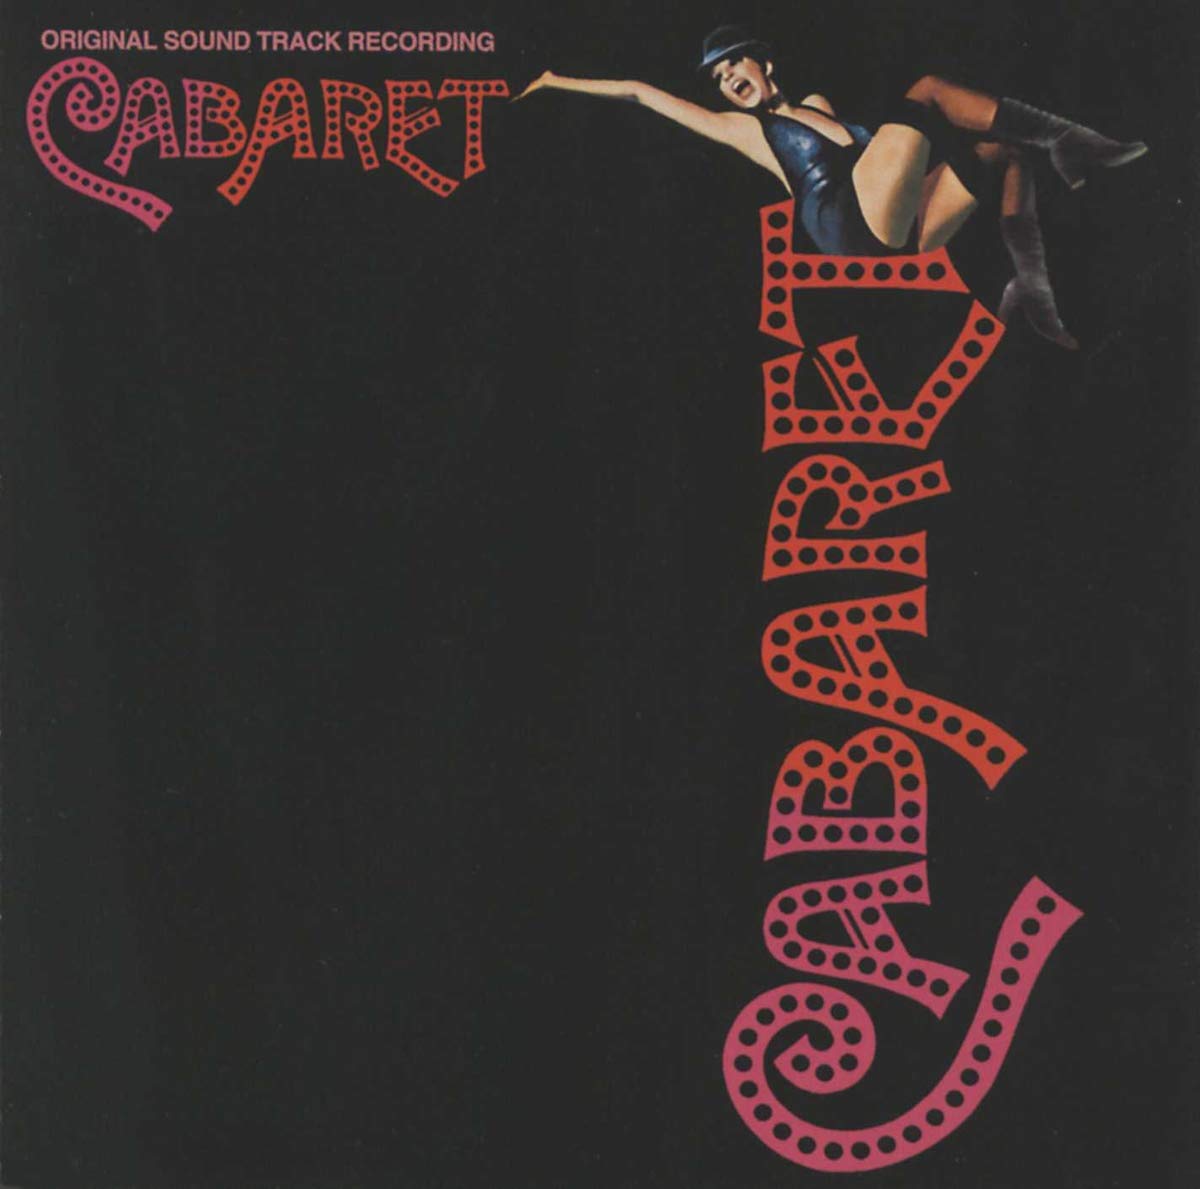 Cabaret (John Kander)